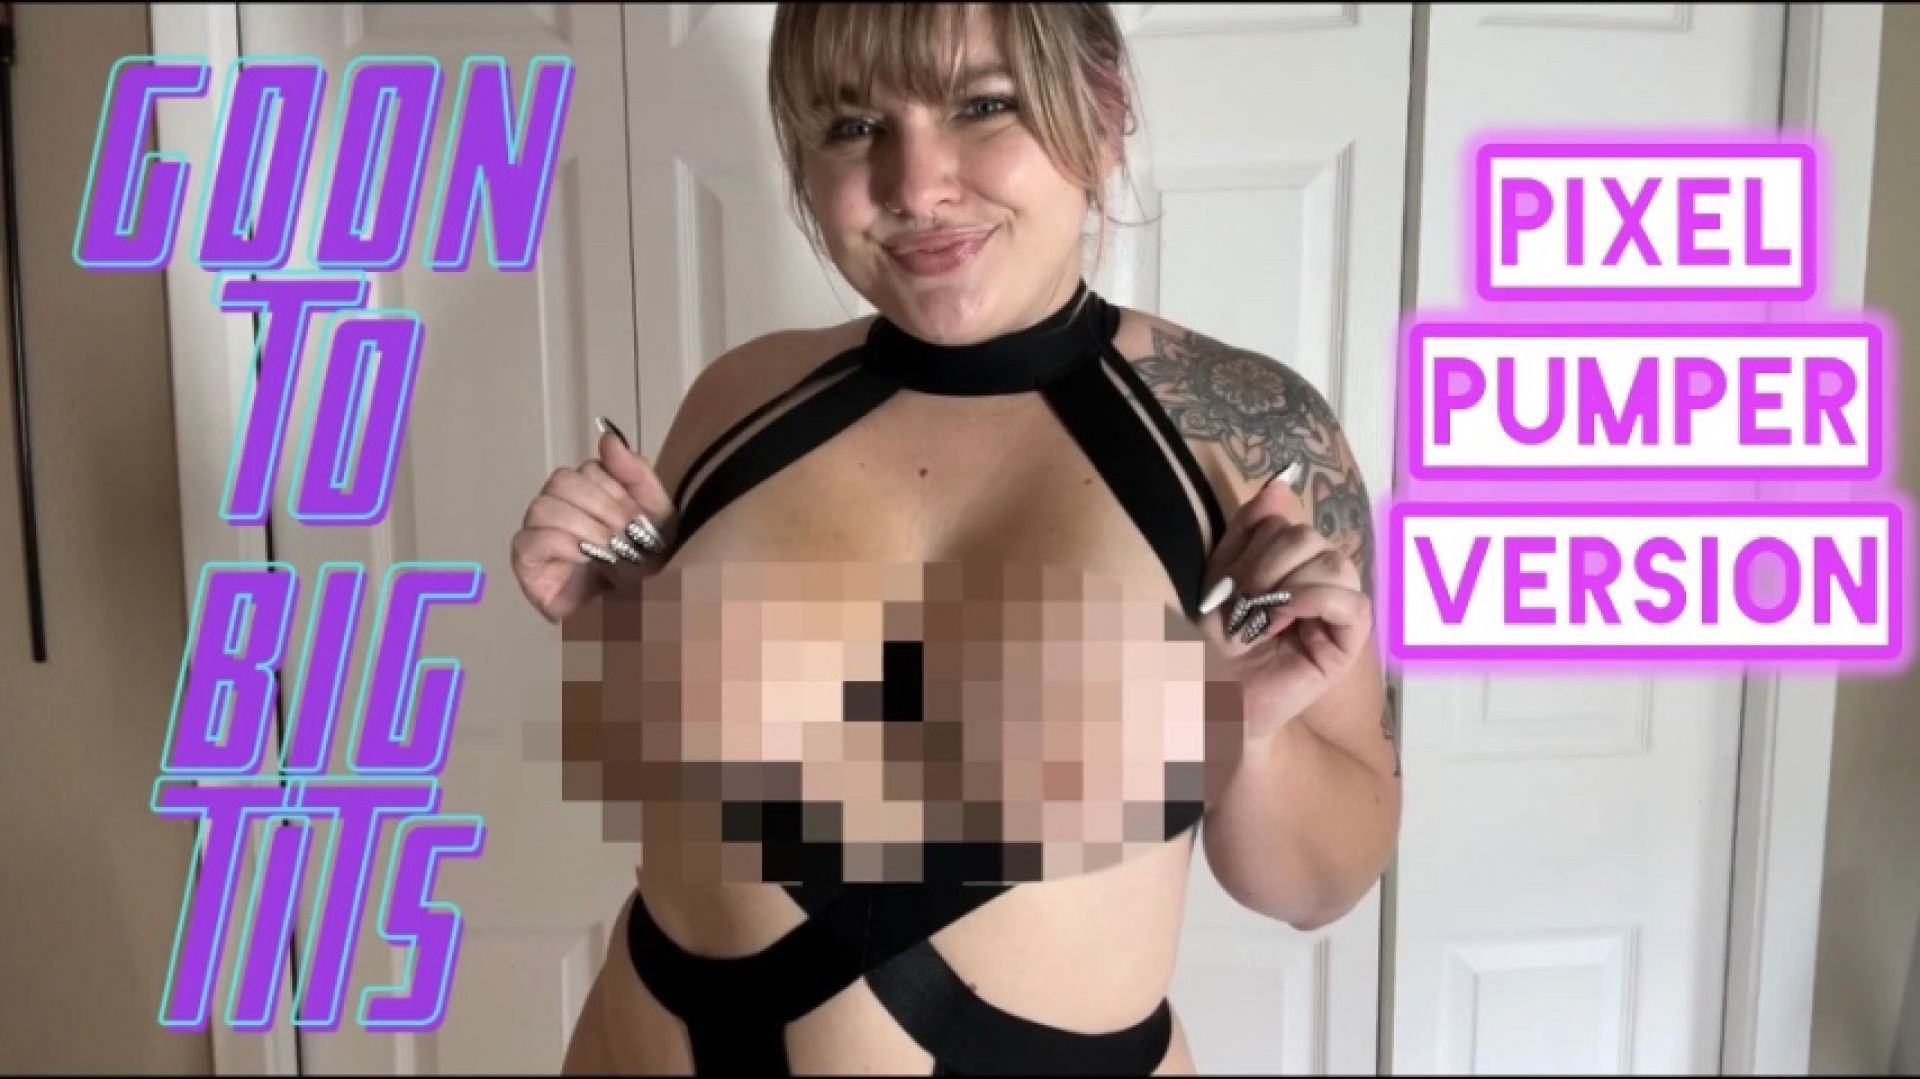 Goon to My Big Tits!: Pixel Pumper Version